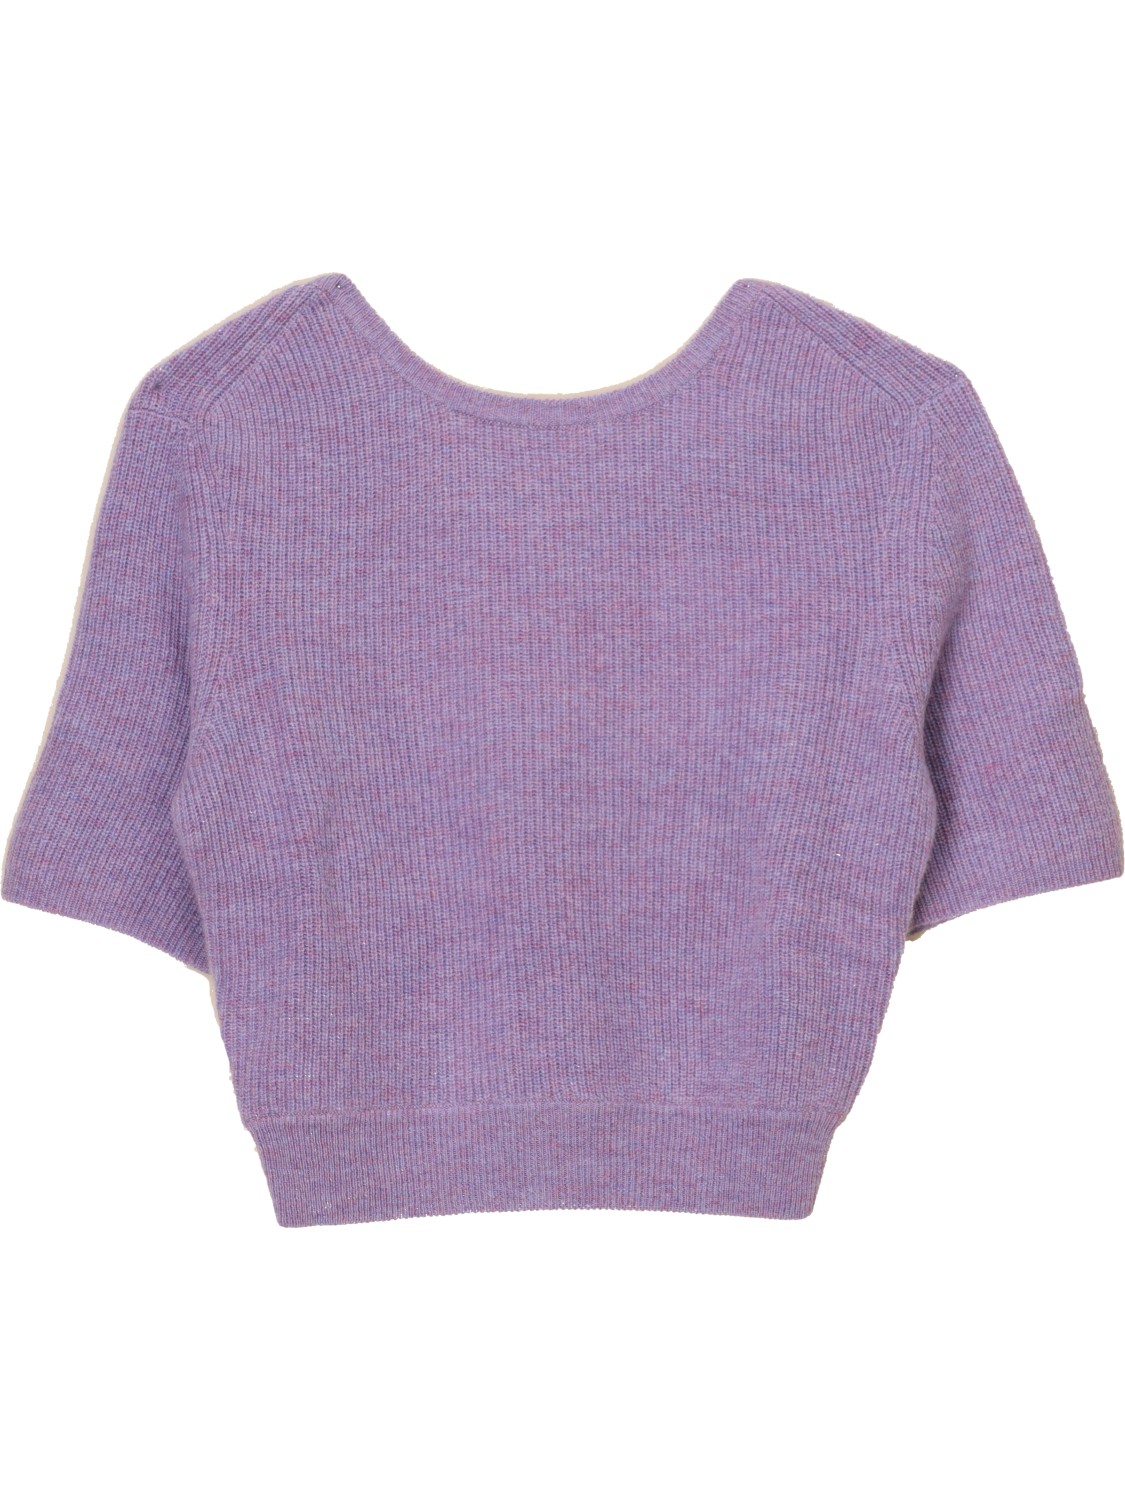 Lisa Yang Josefina – Kurzärmliger Cashmere-Pullover mit rückseitigem Cut-Out   lila XS/S